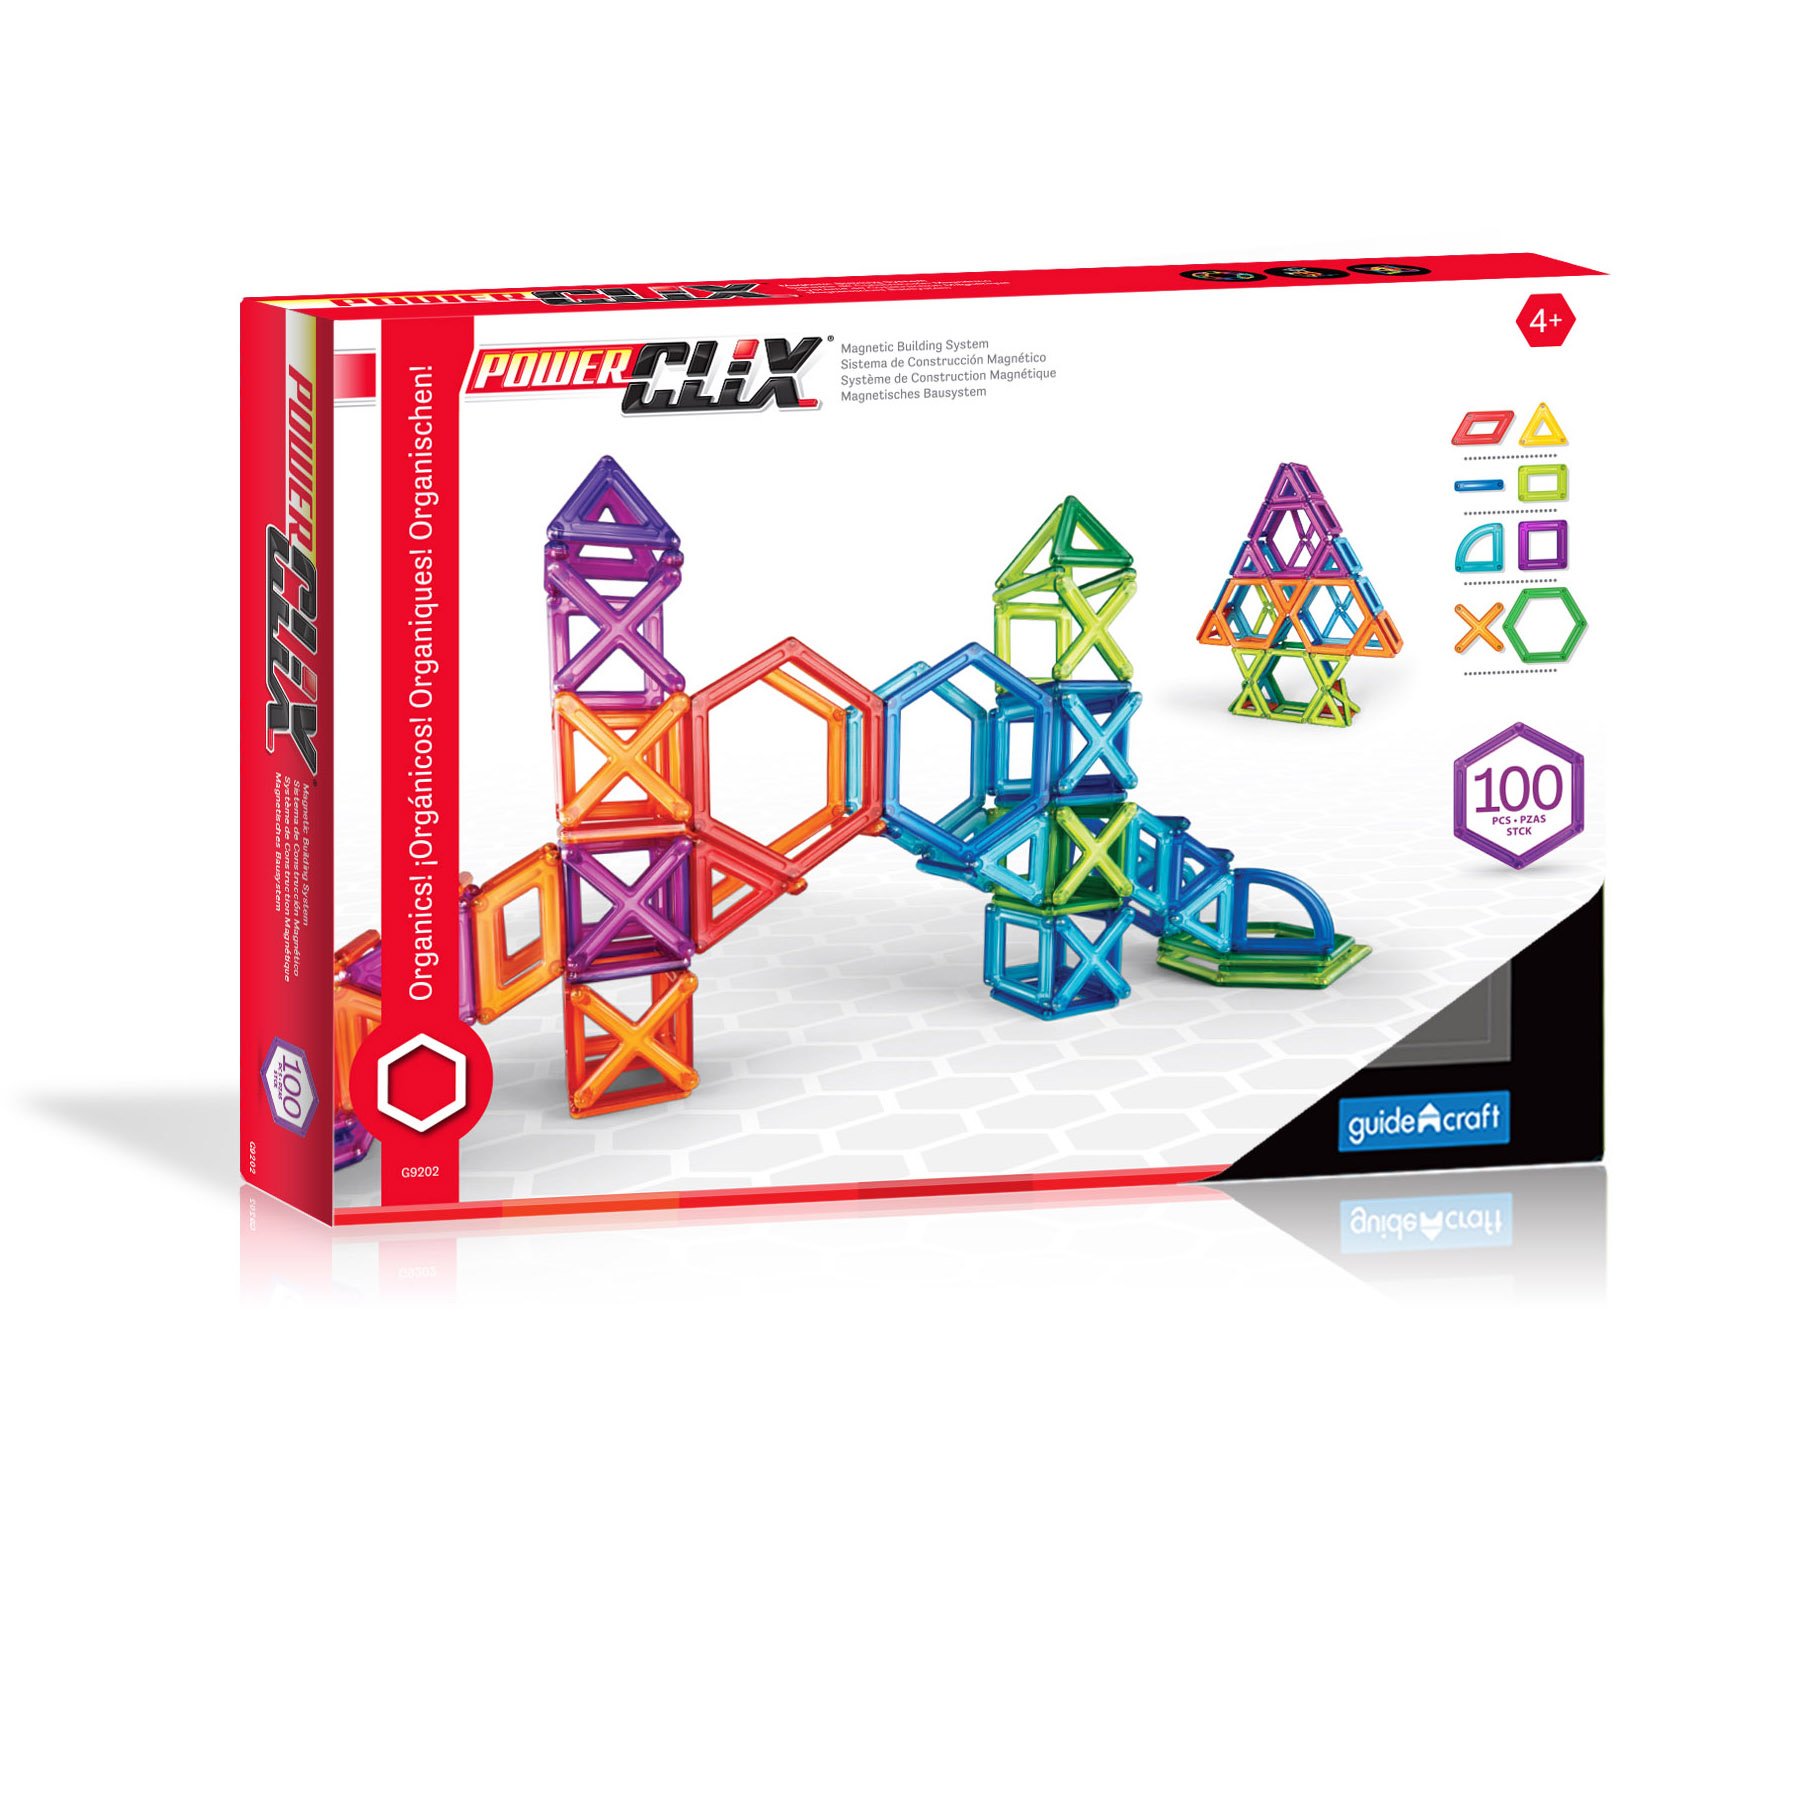 guidecraft Powerclix Frame Magnetic Building Blocks Set, 100 Piece Magnetic Tiles, Stem Educational construction Toy